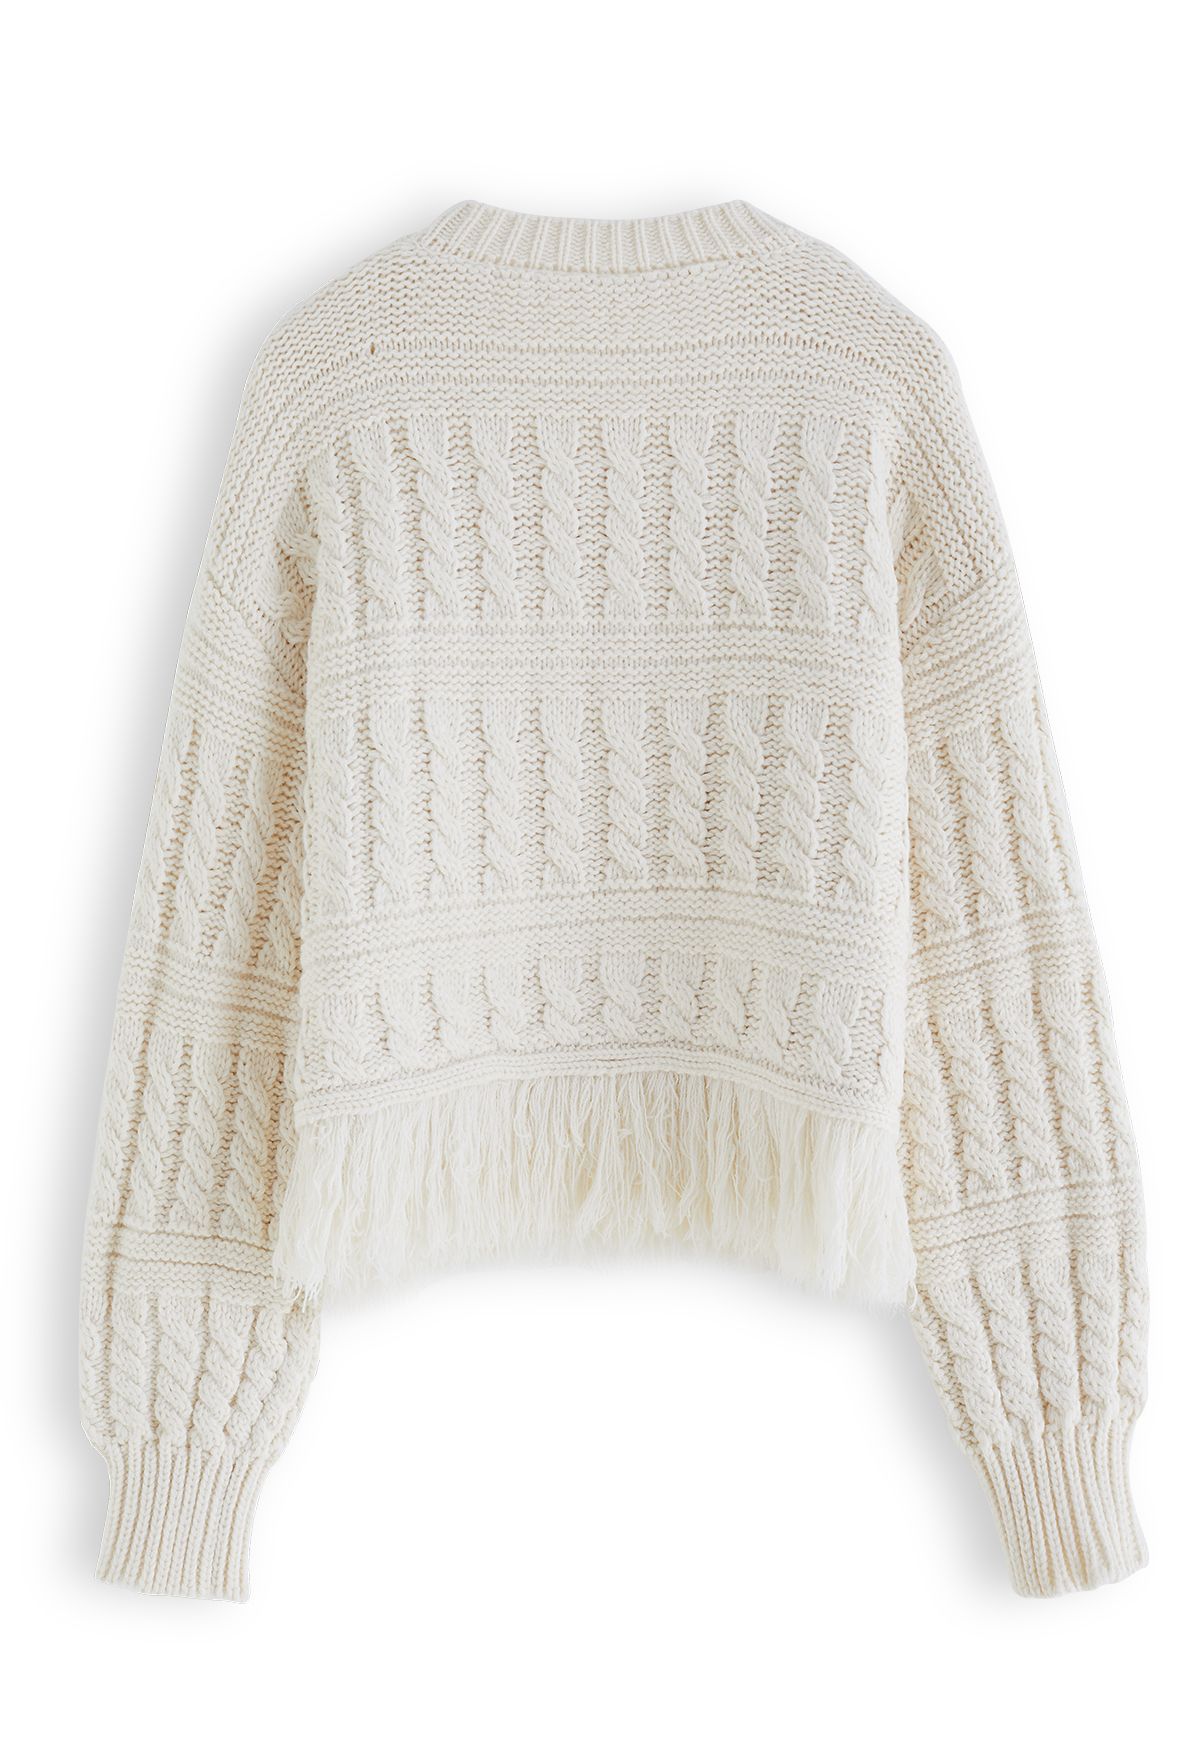 Fringed Hem Braided Knit Sweater in Ivory